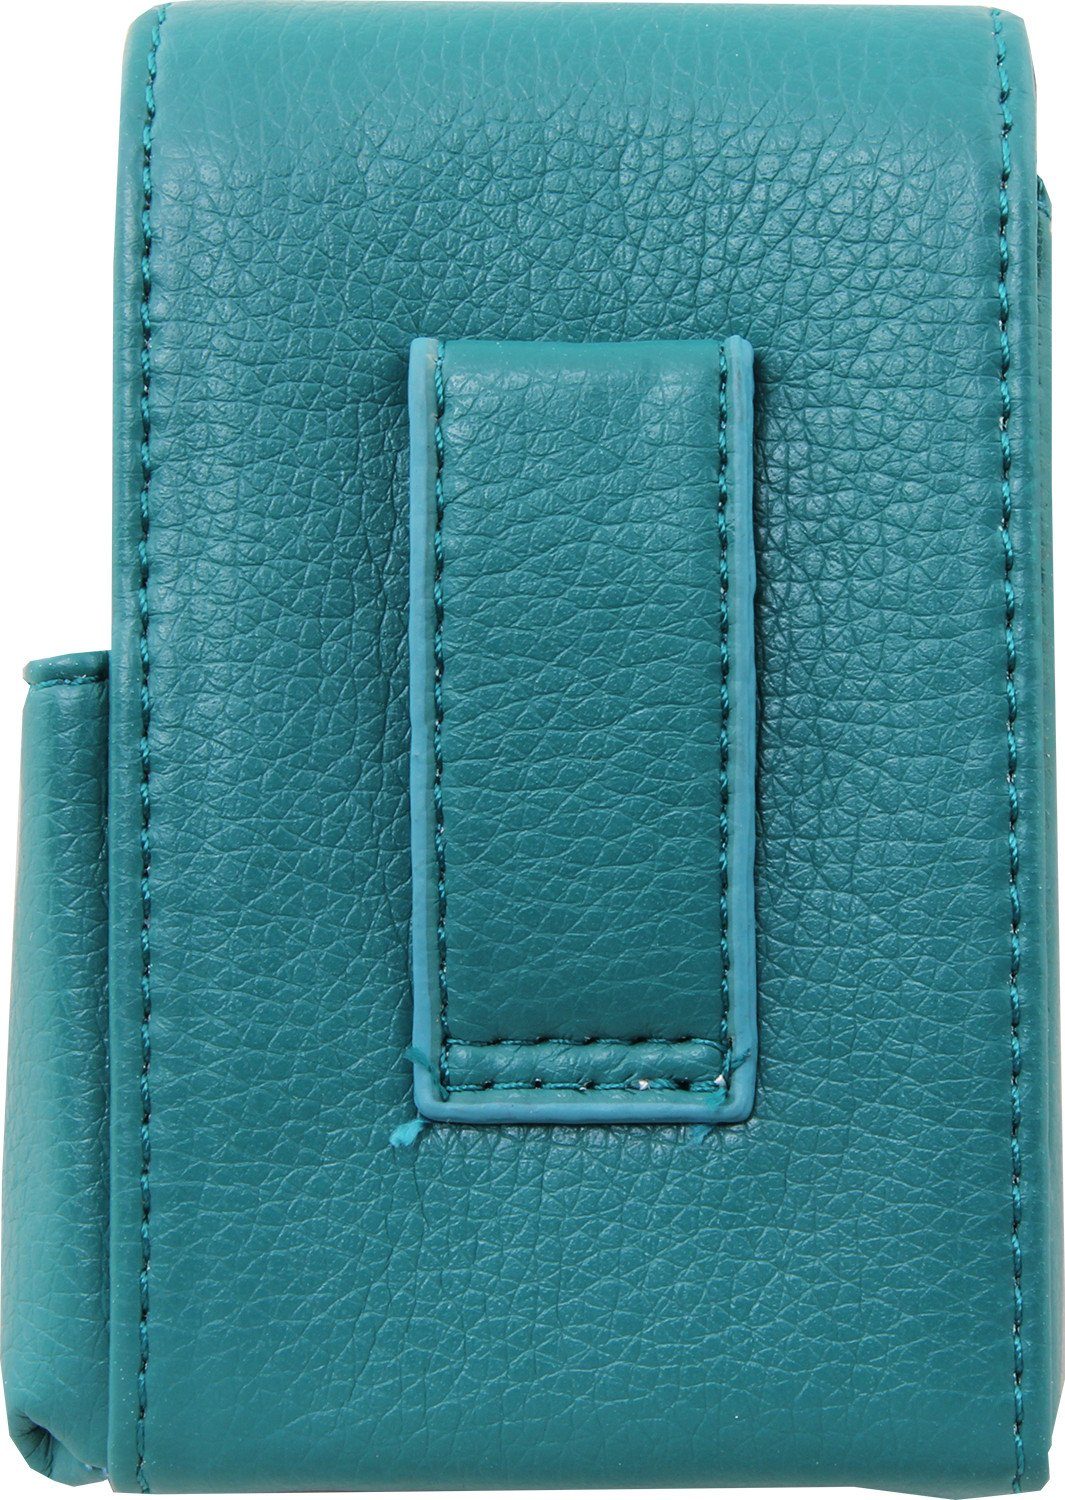 Genuine Leather Turquoise Fliptop Cigarette Case